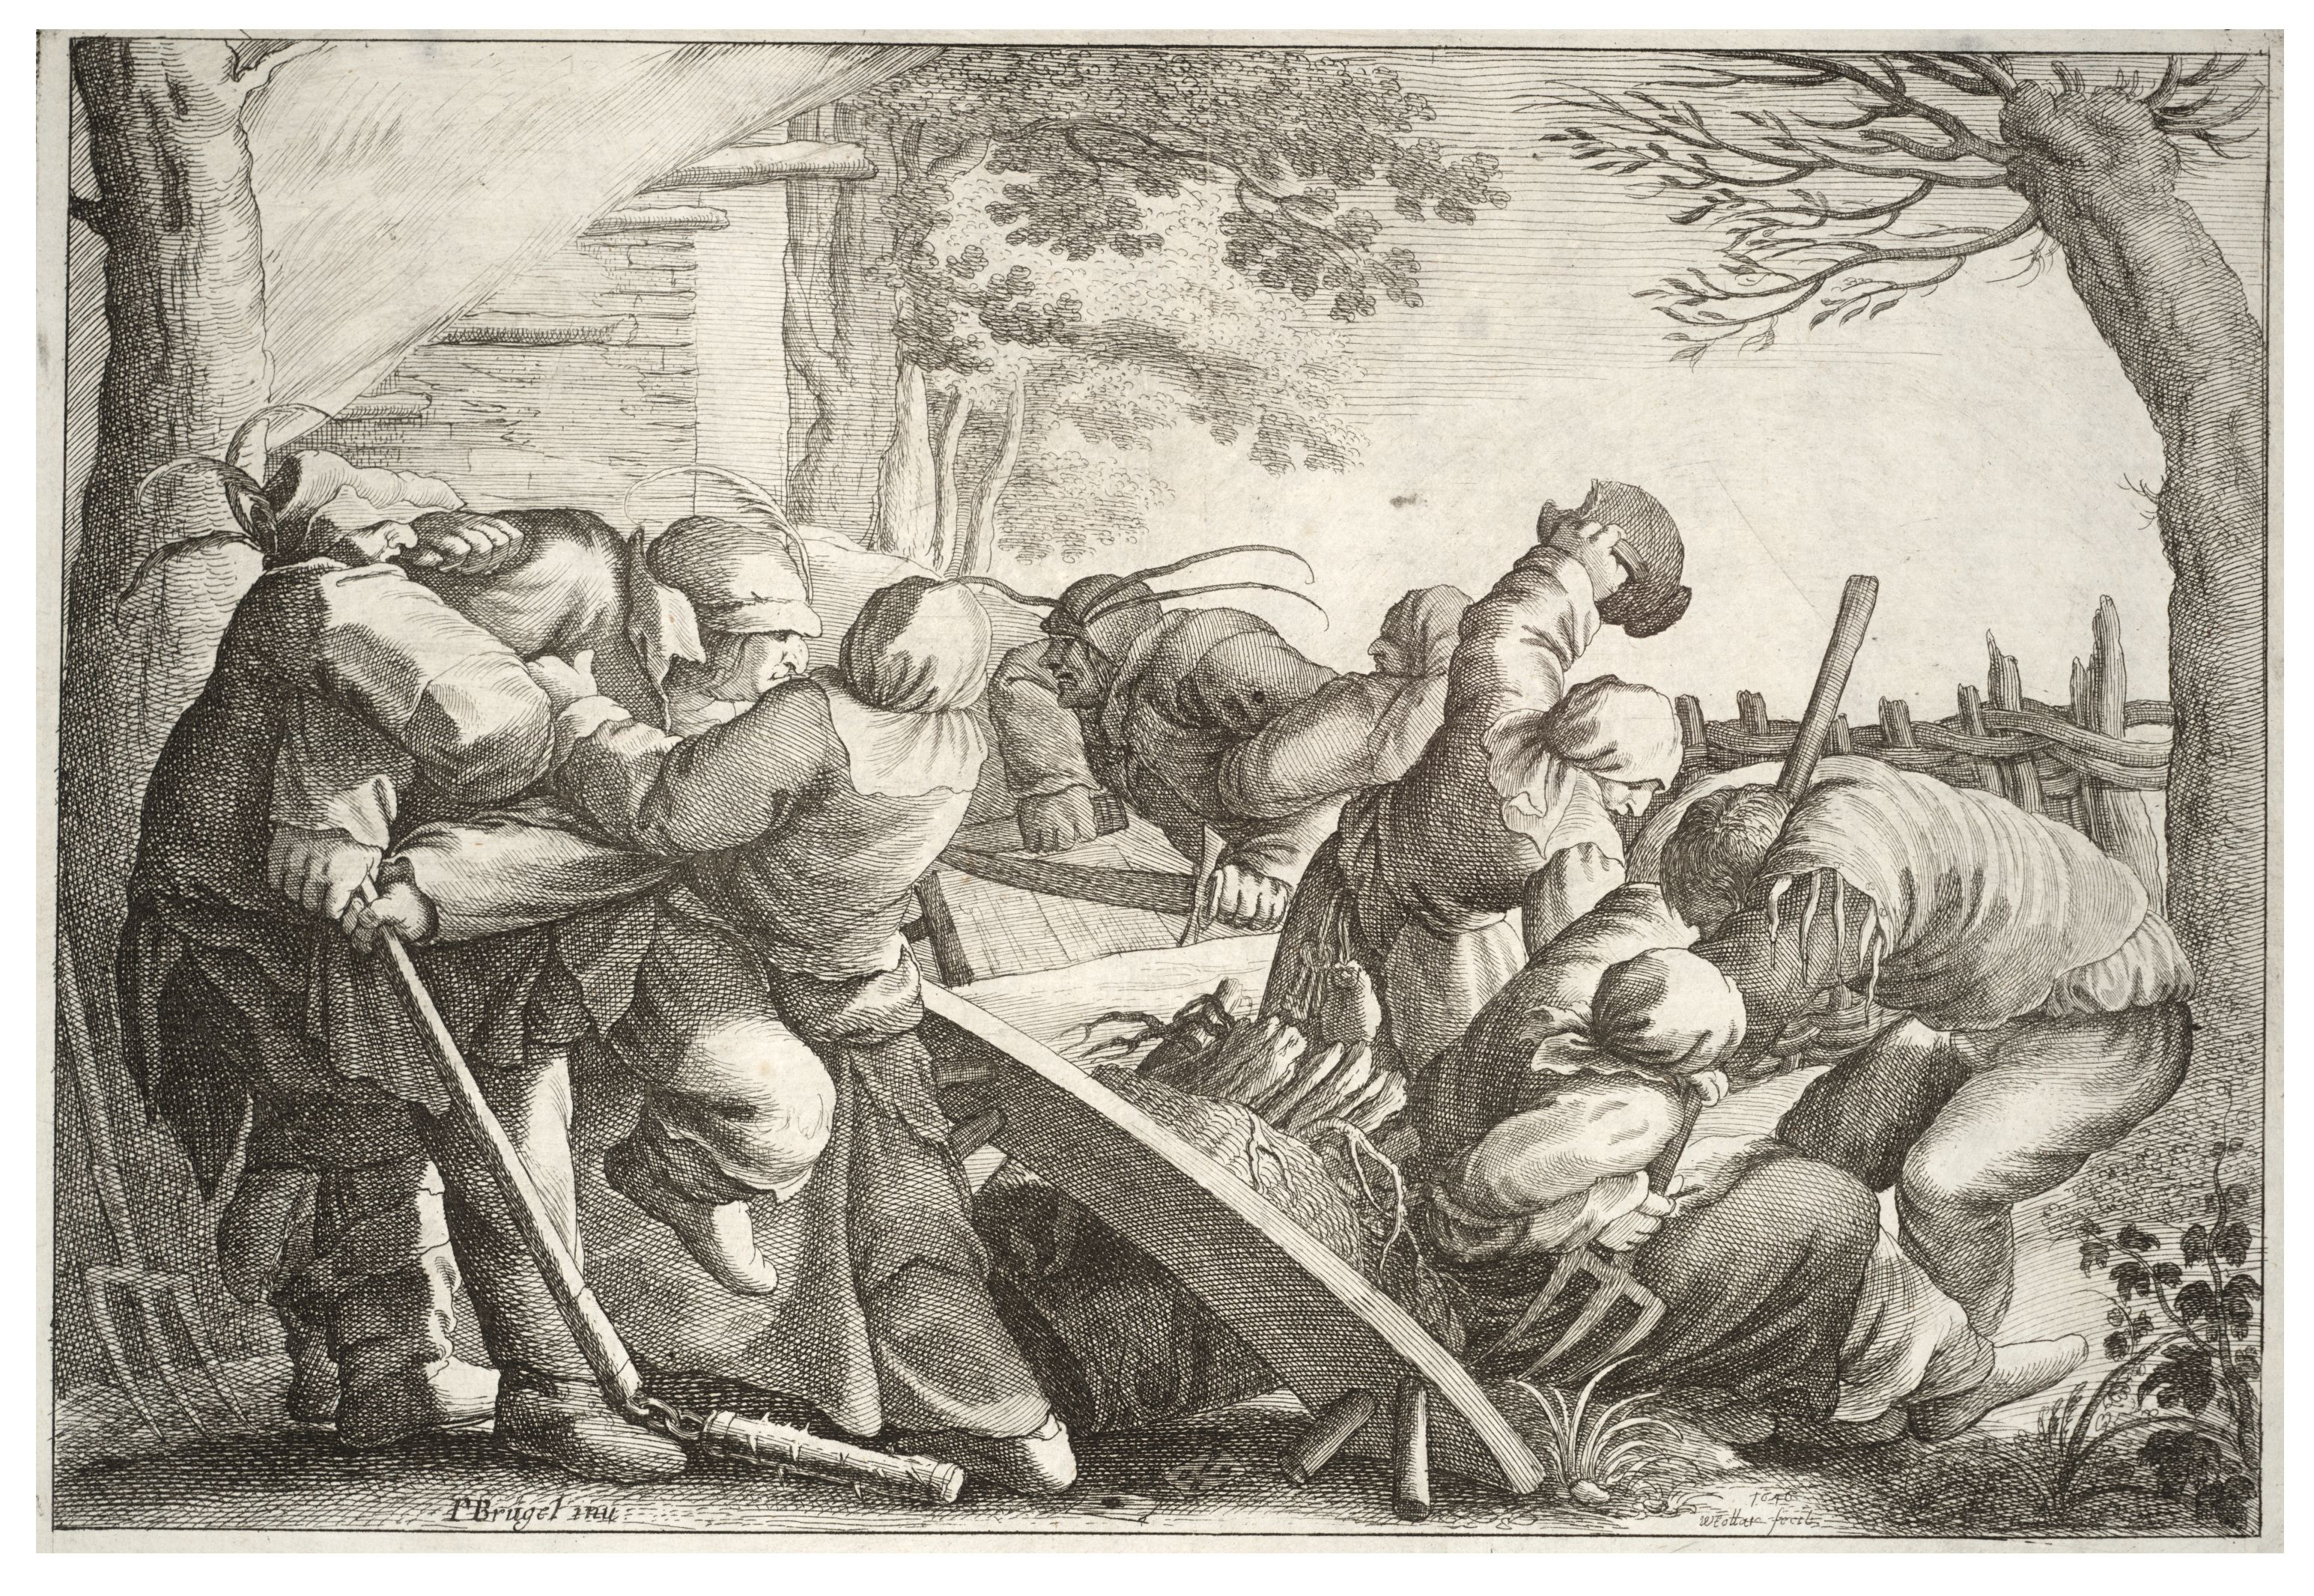 Wenceslas_Hollar_-_Peasants_fighting,_after_Breugel-17thcent.jpg